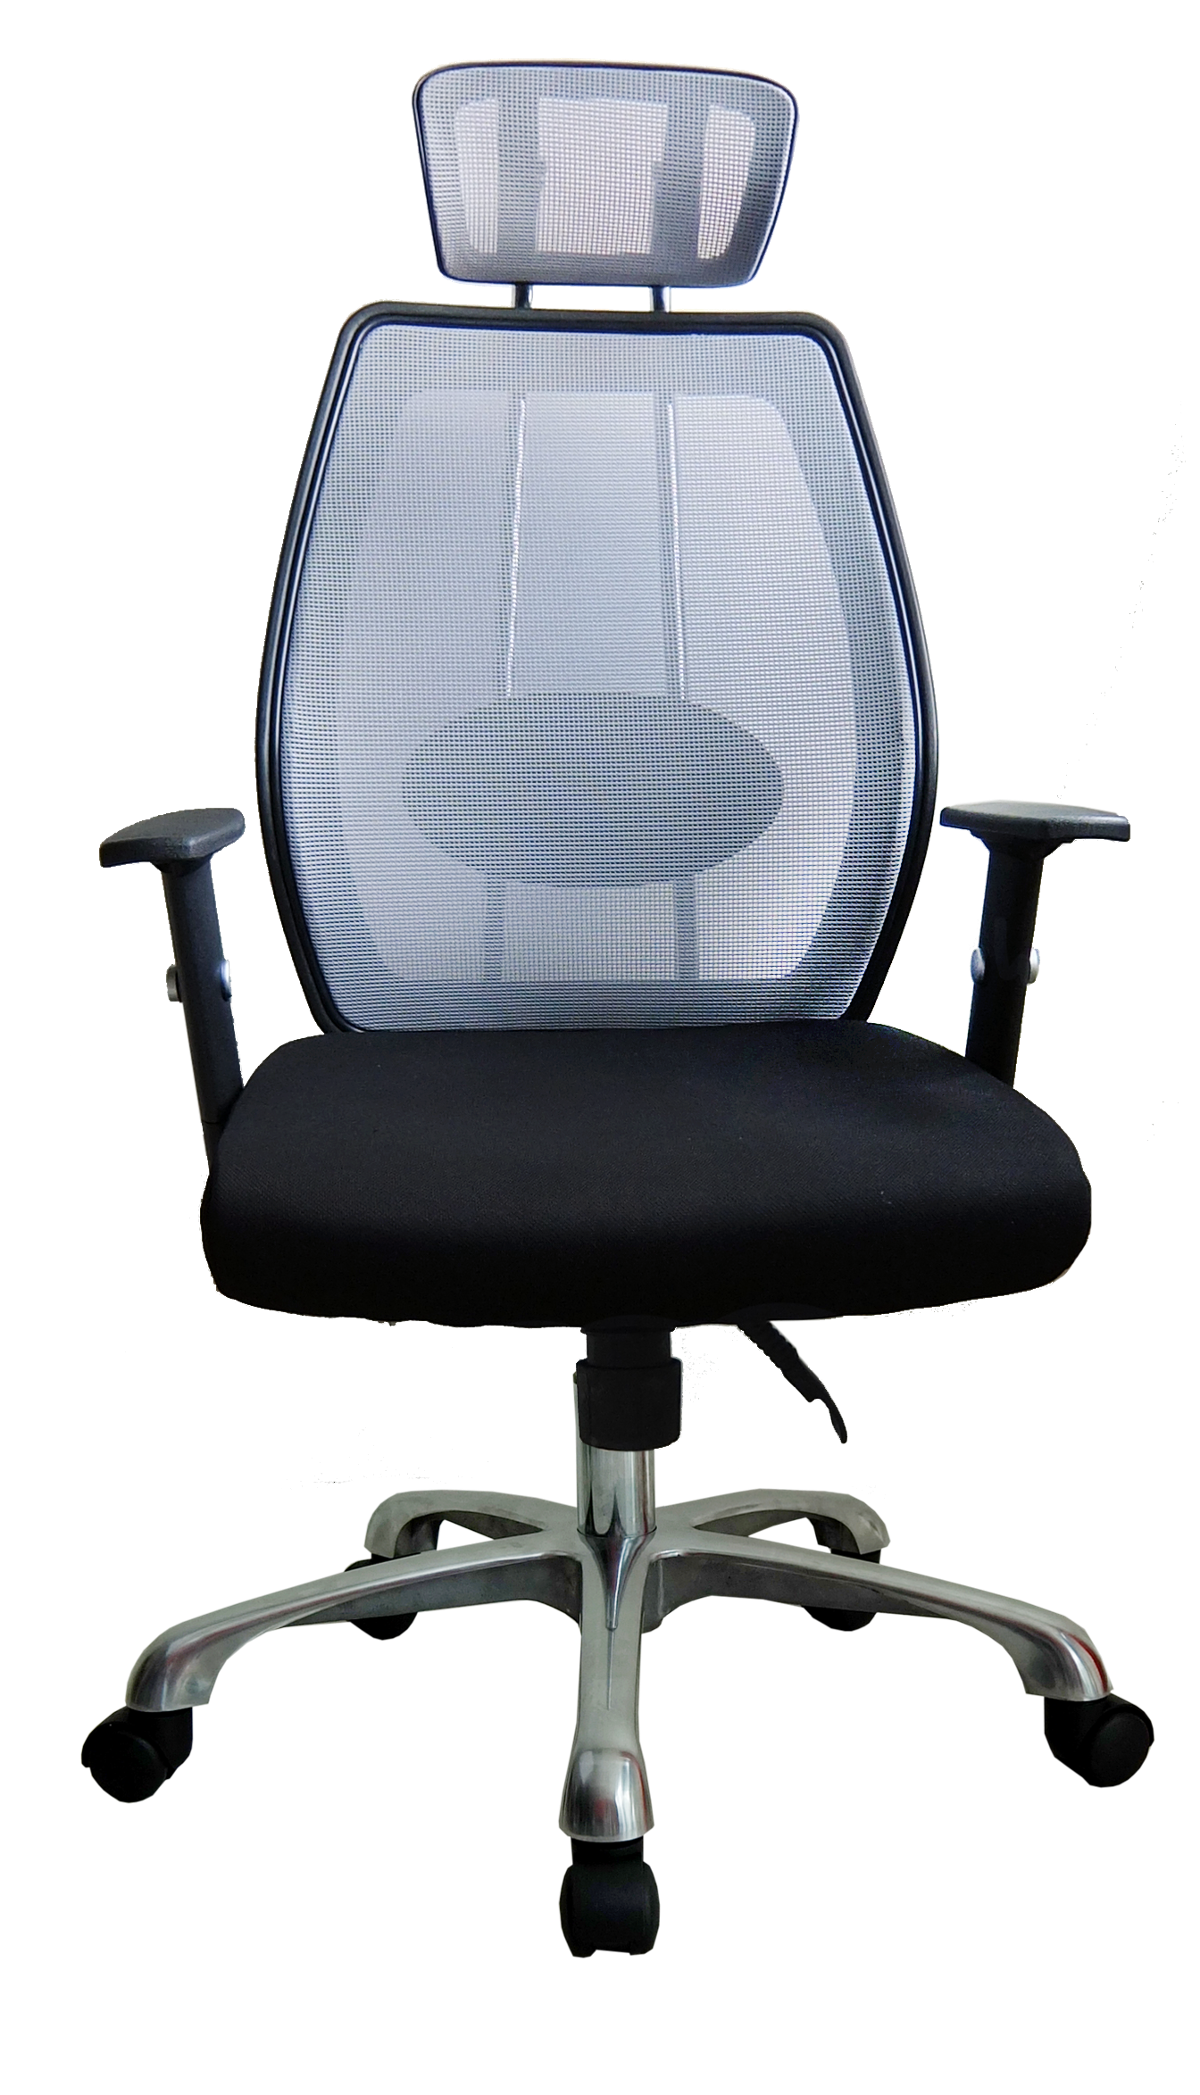 Super chair เก้าอี้ผู้บริหาร รุ่น Premium KOREA H